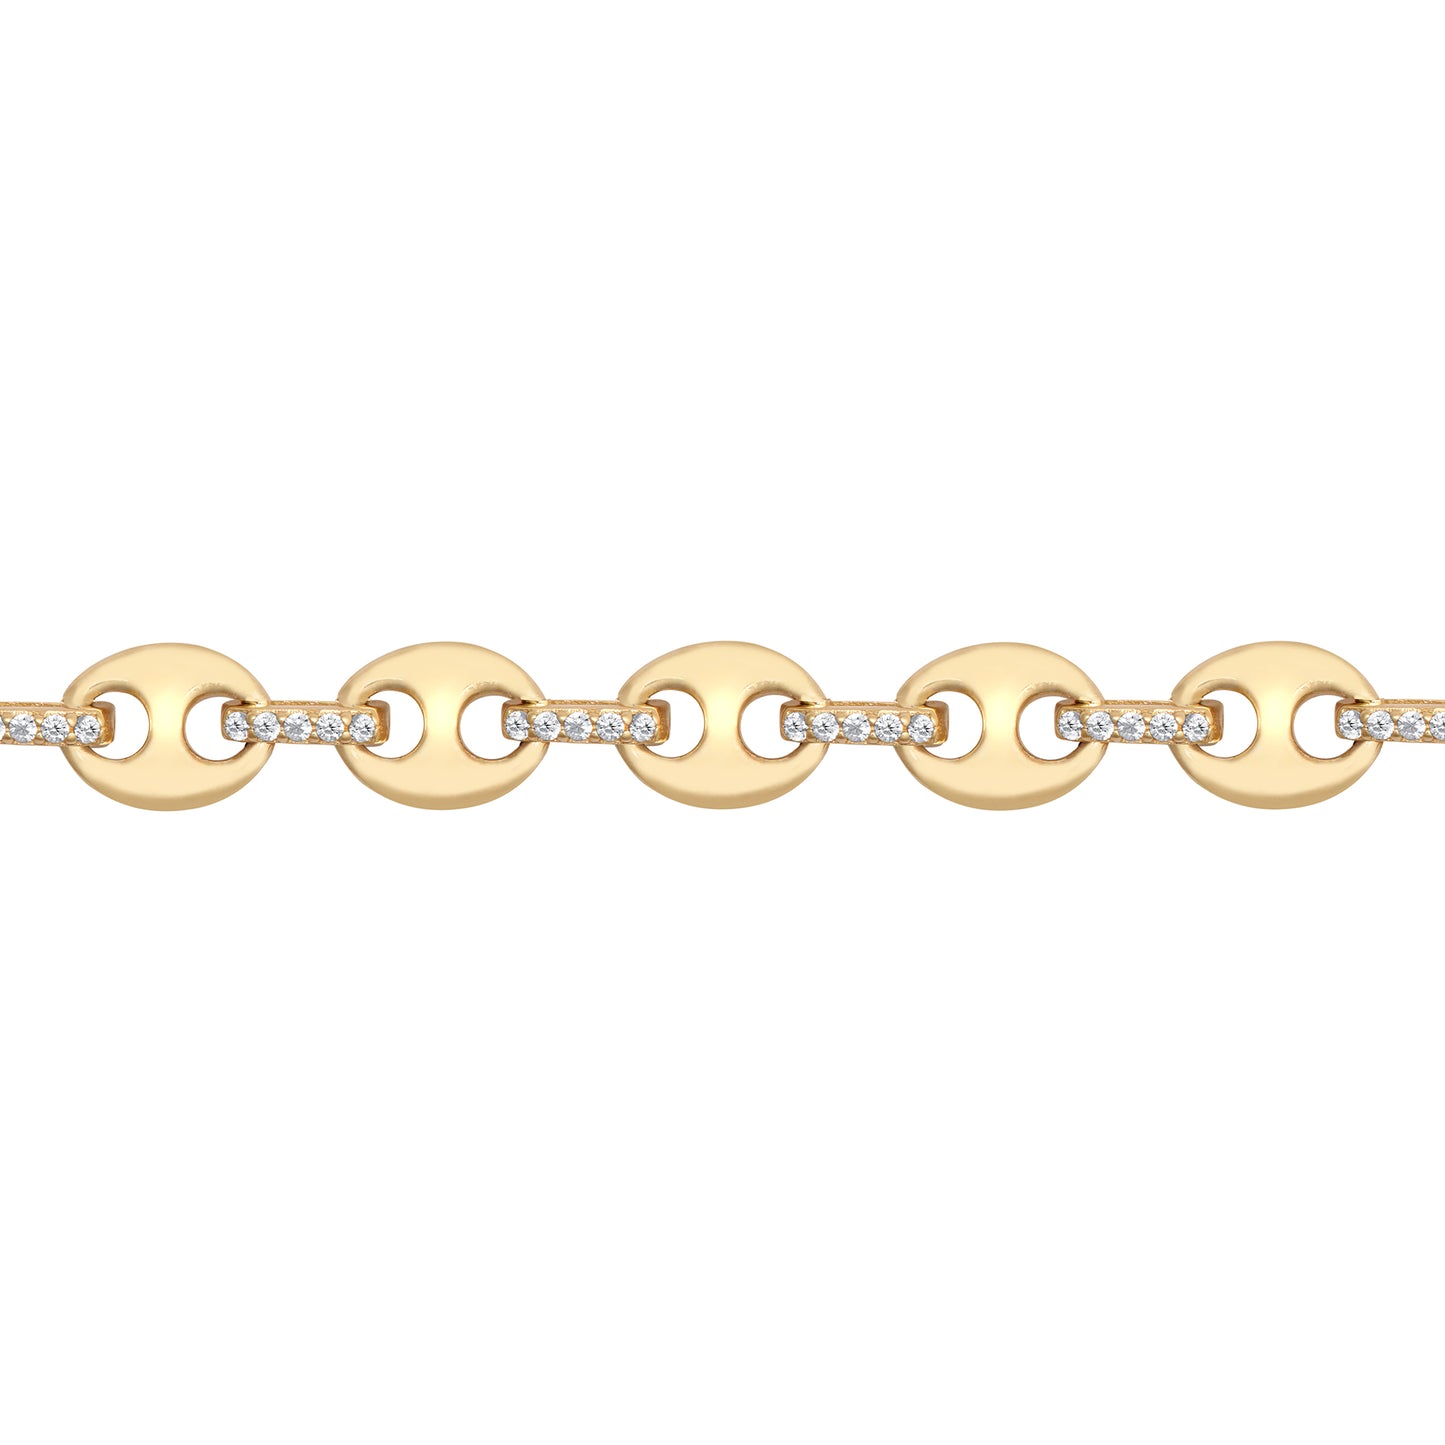 9ct Gold  CZ Coffee Bean Anchor 6mm Chain Link Bracelet 7.5inch - JBB403